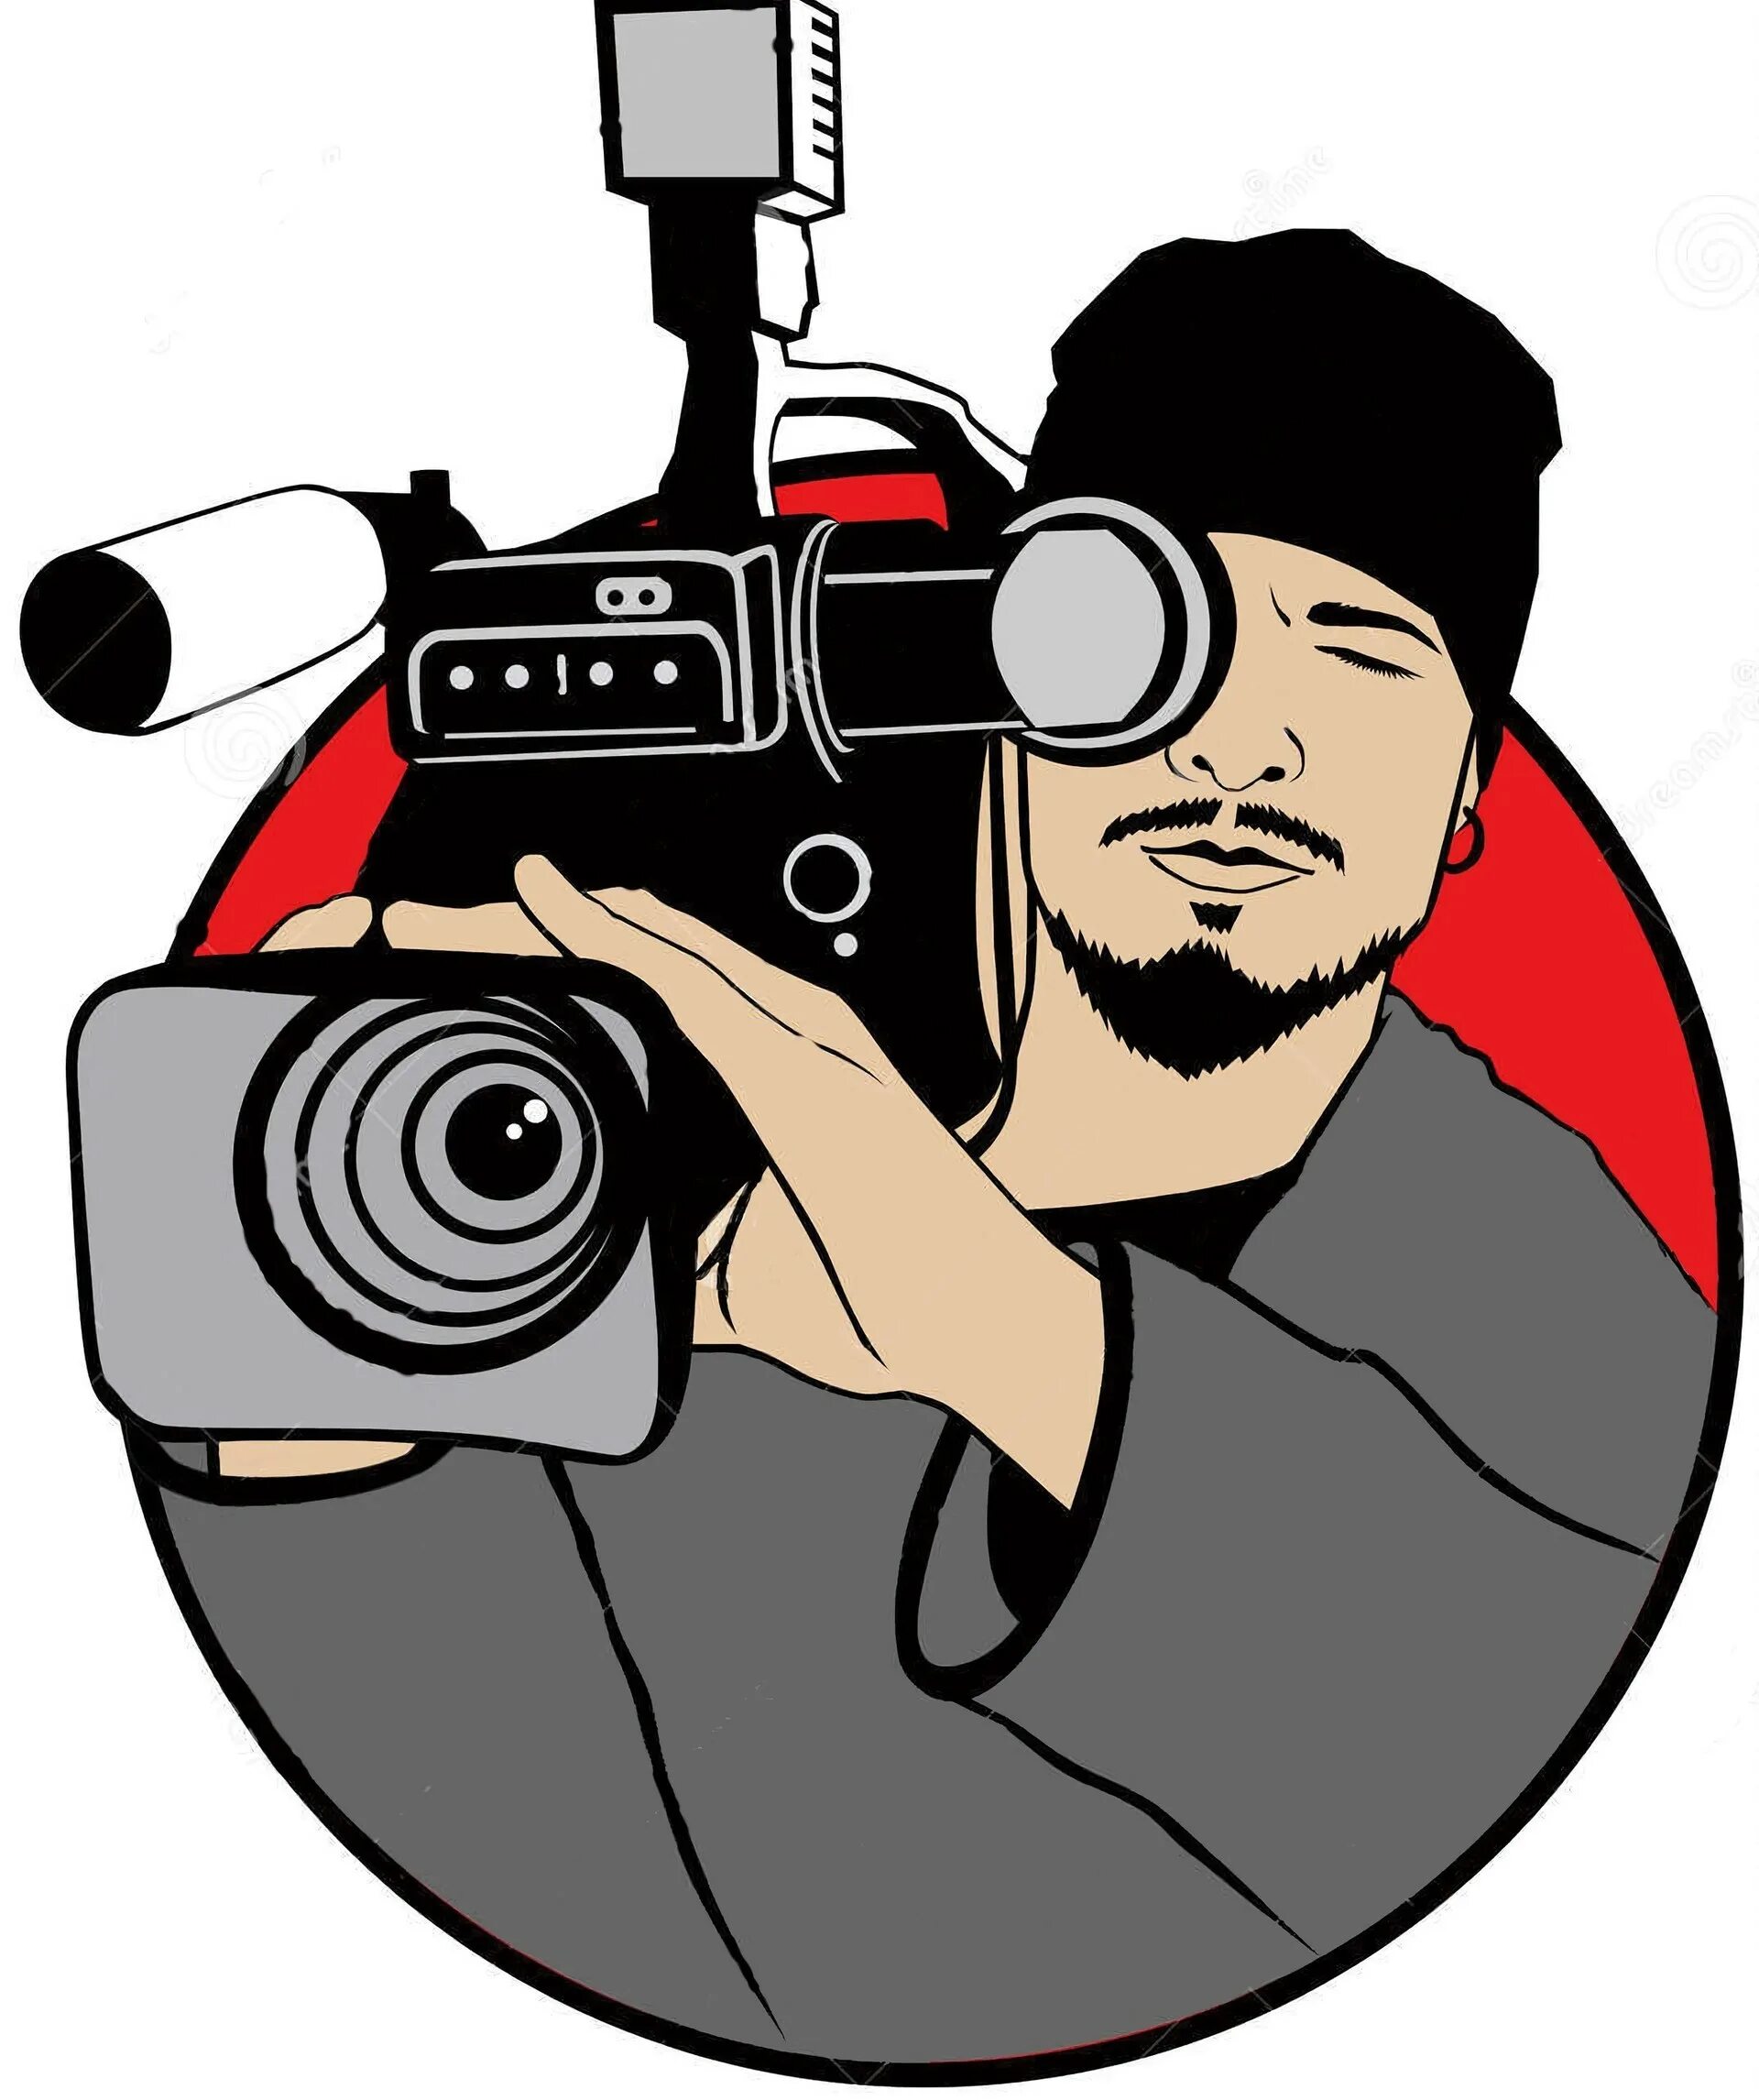 Аватарка тв. Человек с видеокамерой. Фотоаппарат логотип. Оператор с камерой. Рисованный человек с фотоаппаратом.